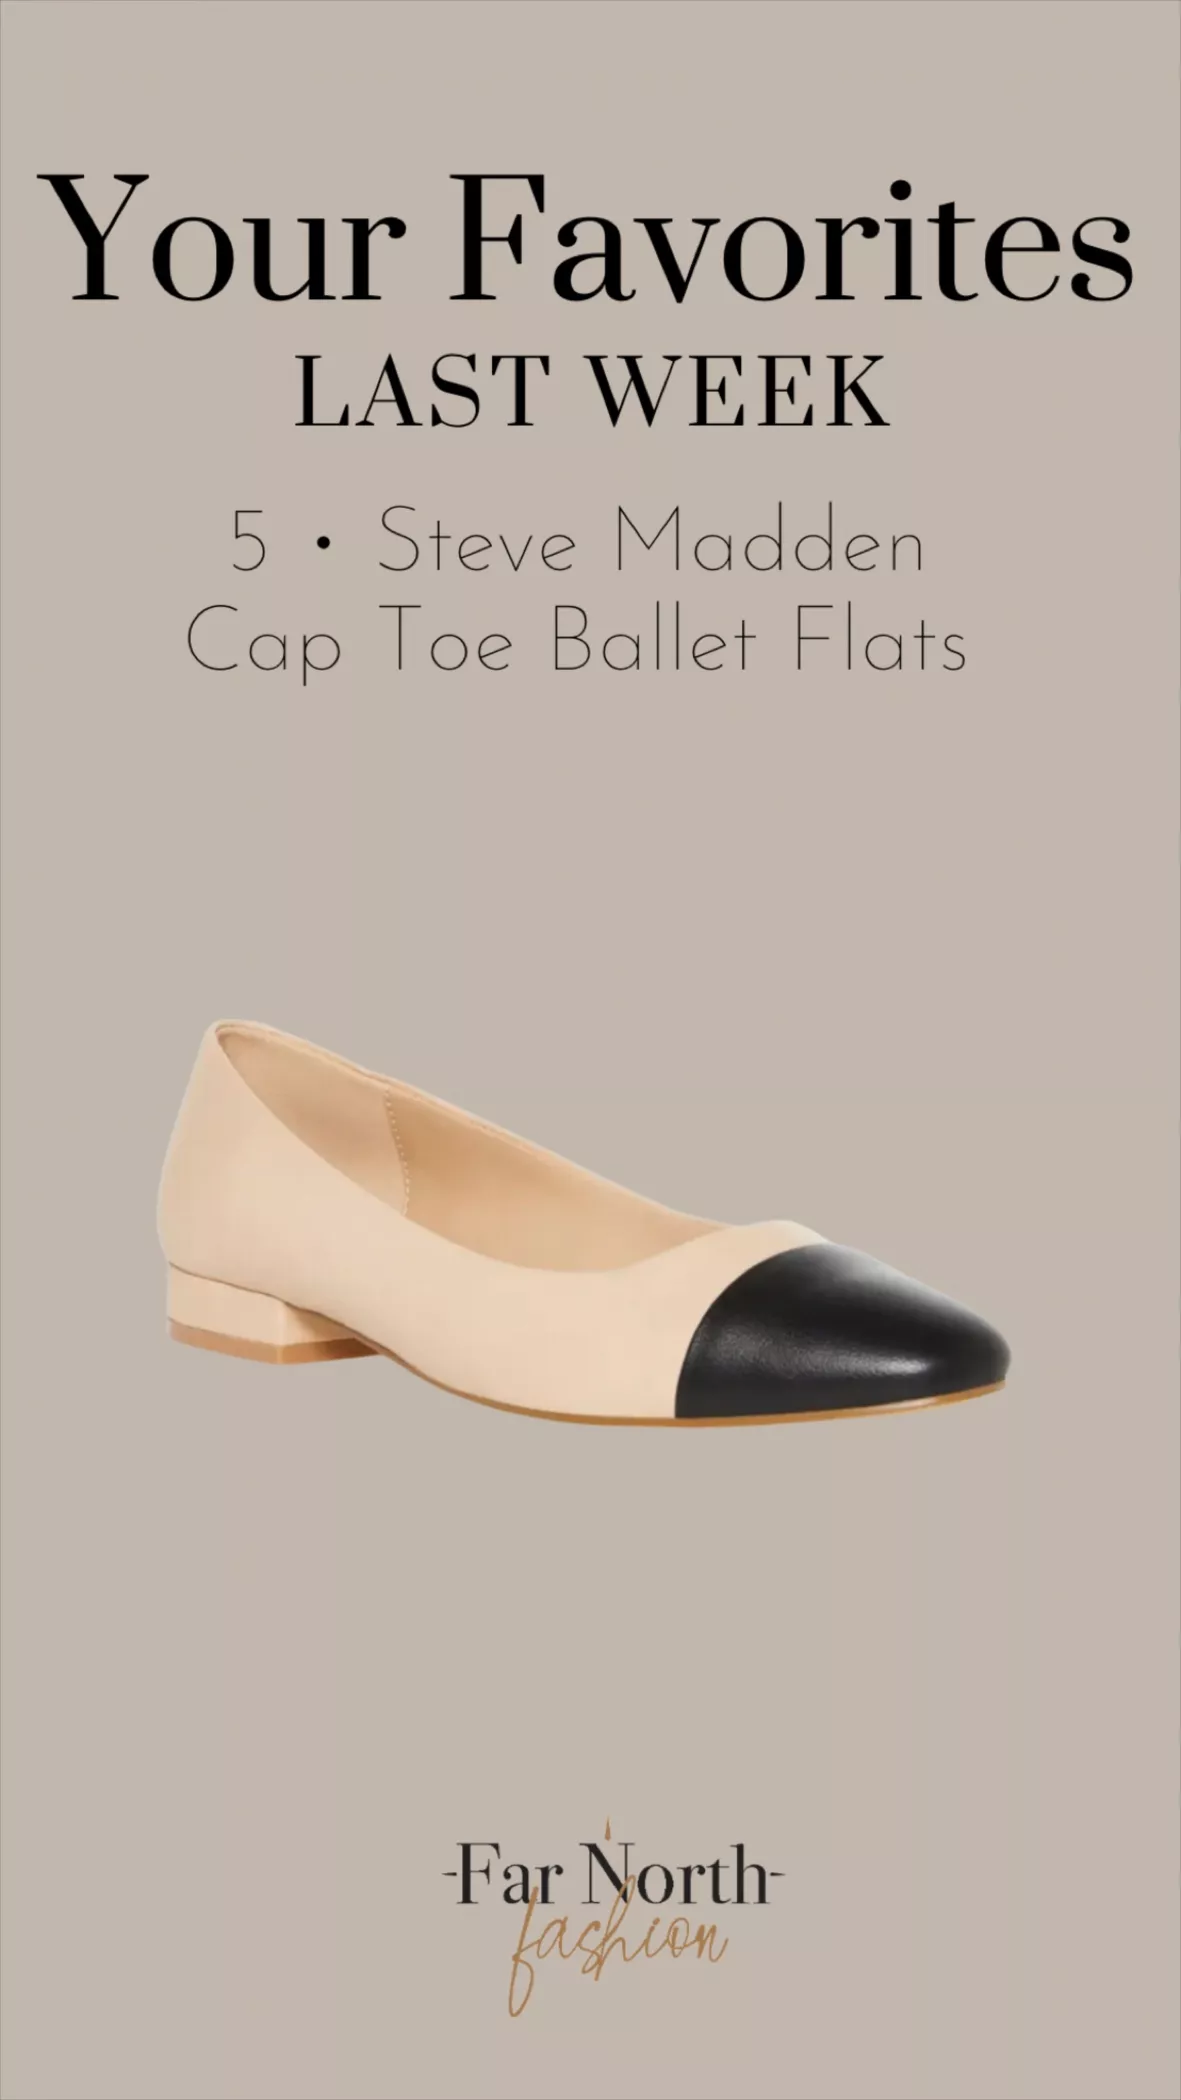 Blair Cap Toe Ballet Flat (Women) curated on LTK